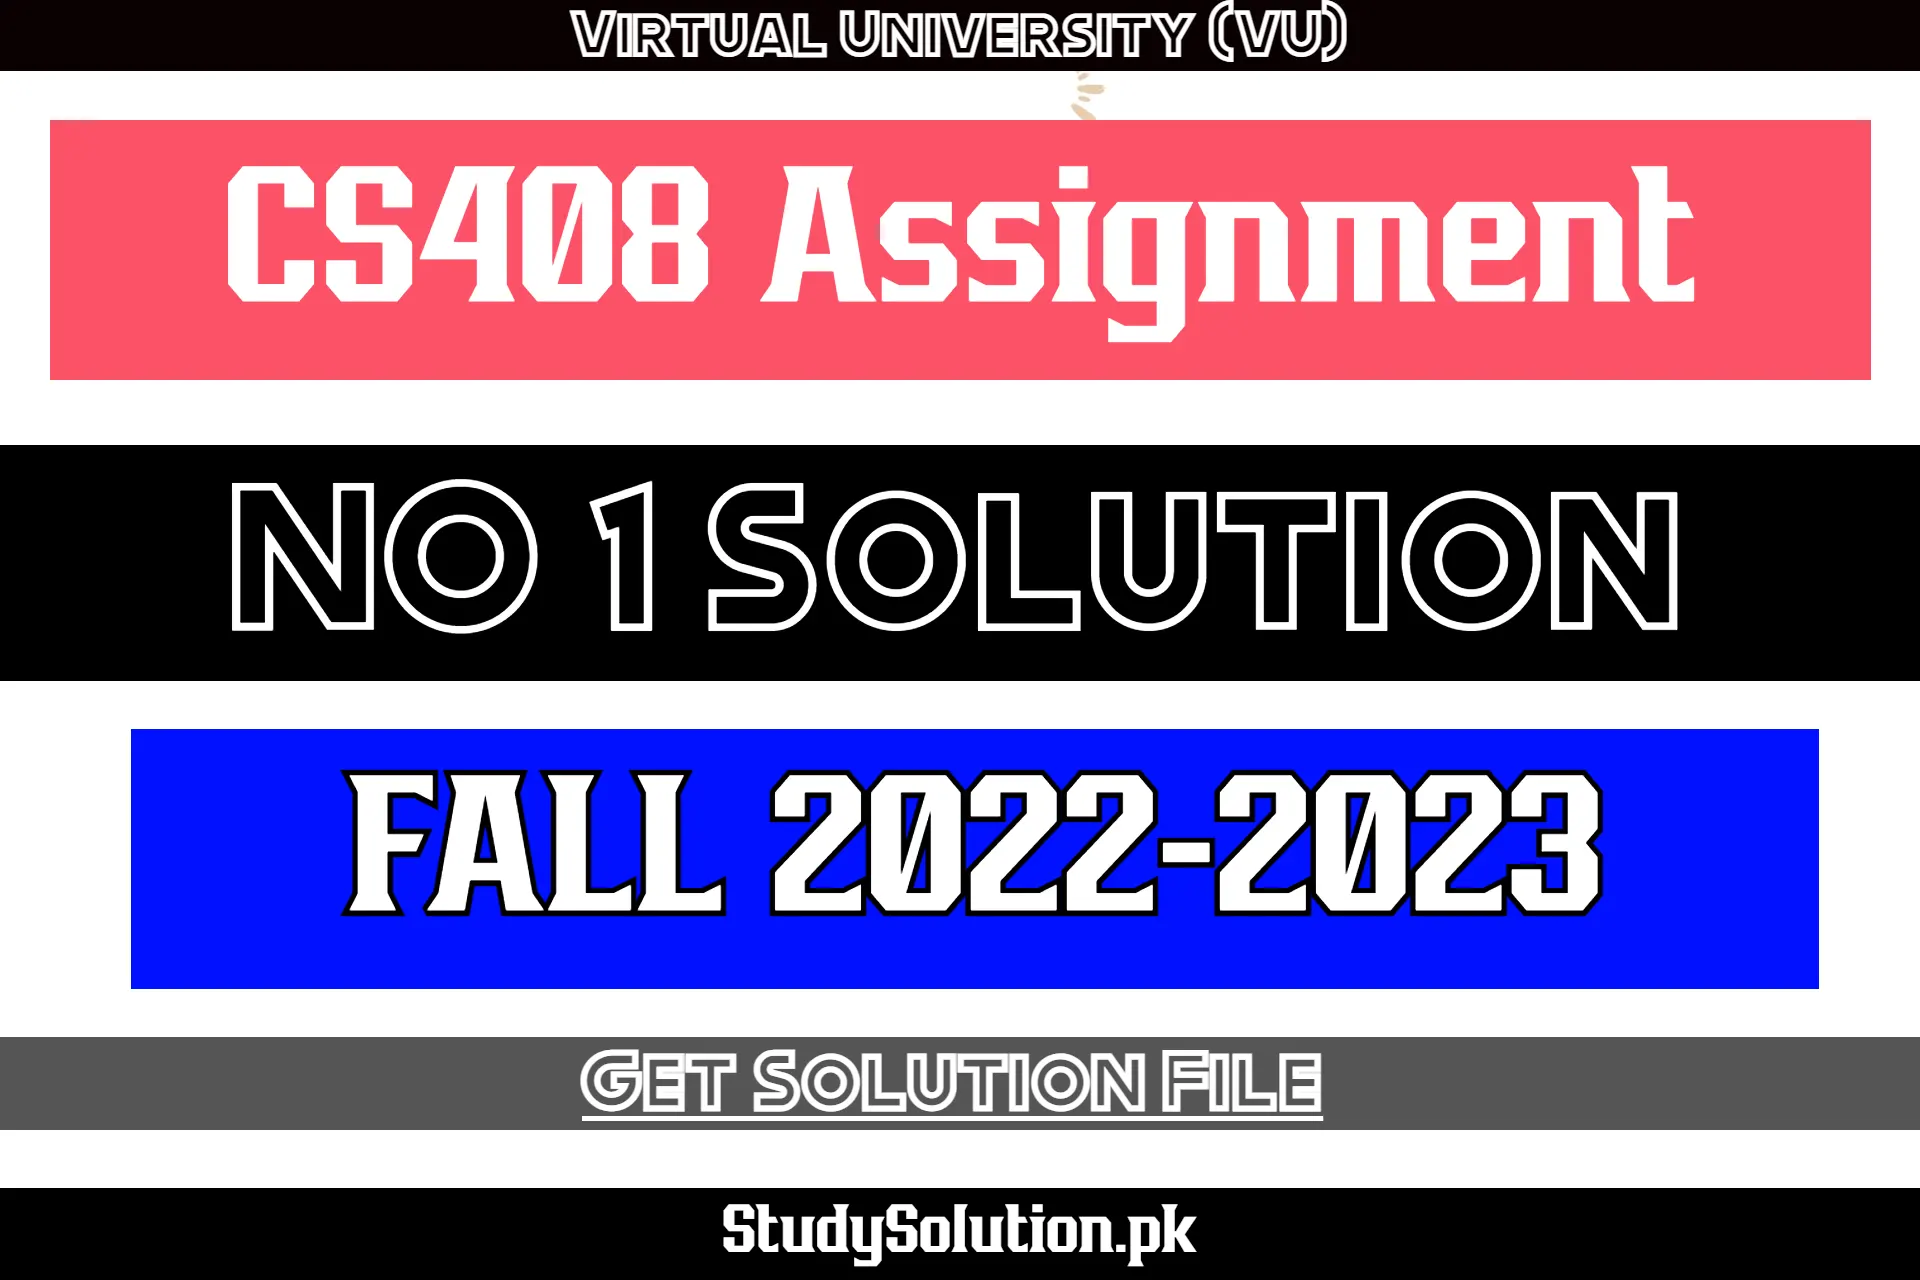 CS408 Assignment No 1 Solution Fall 2022